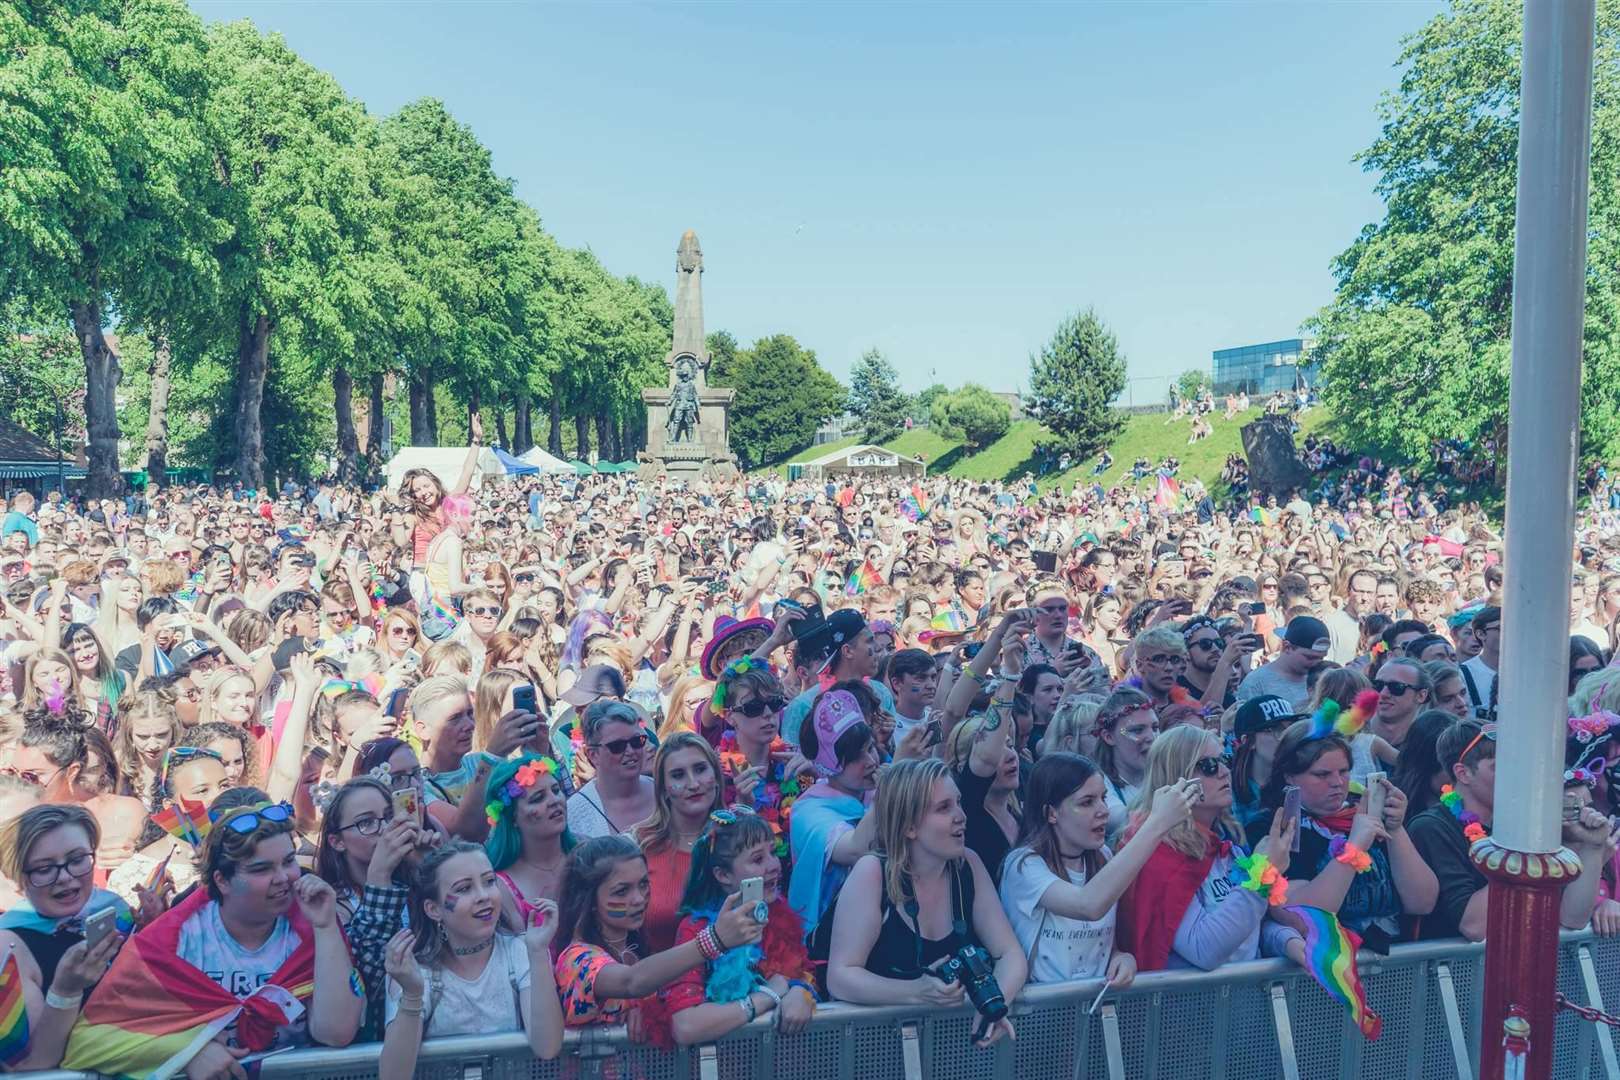 Canterbury Pride at Dane John Gardens is massively popular